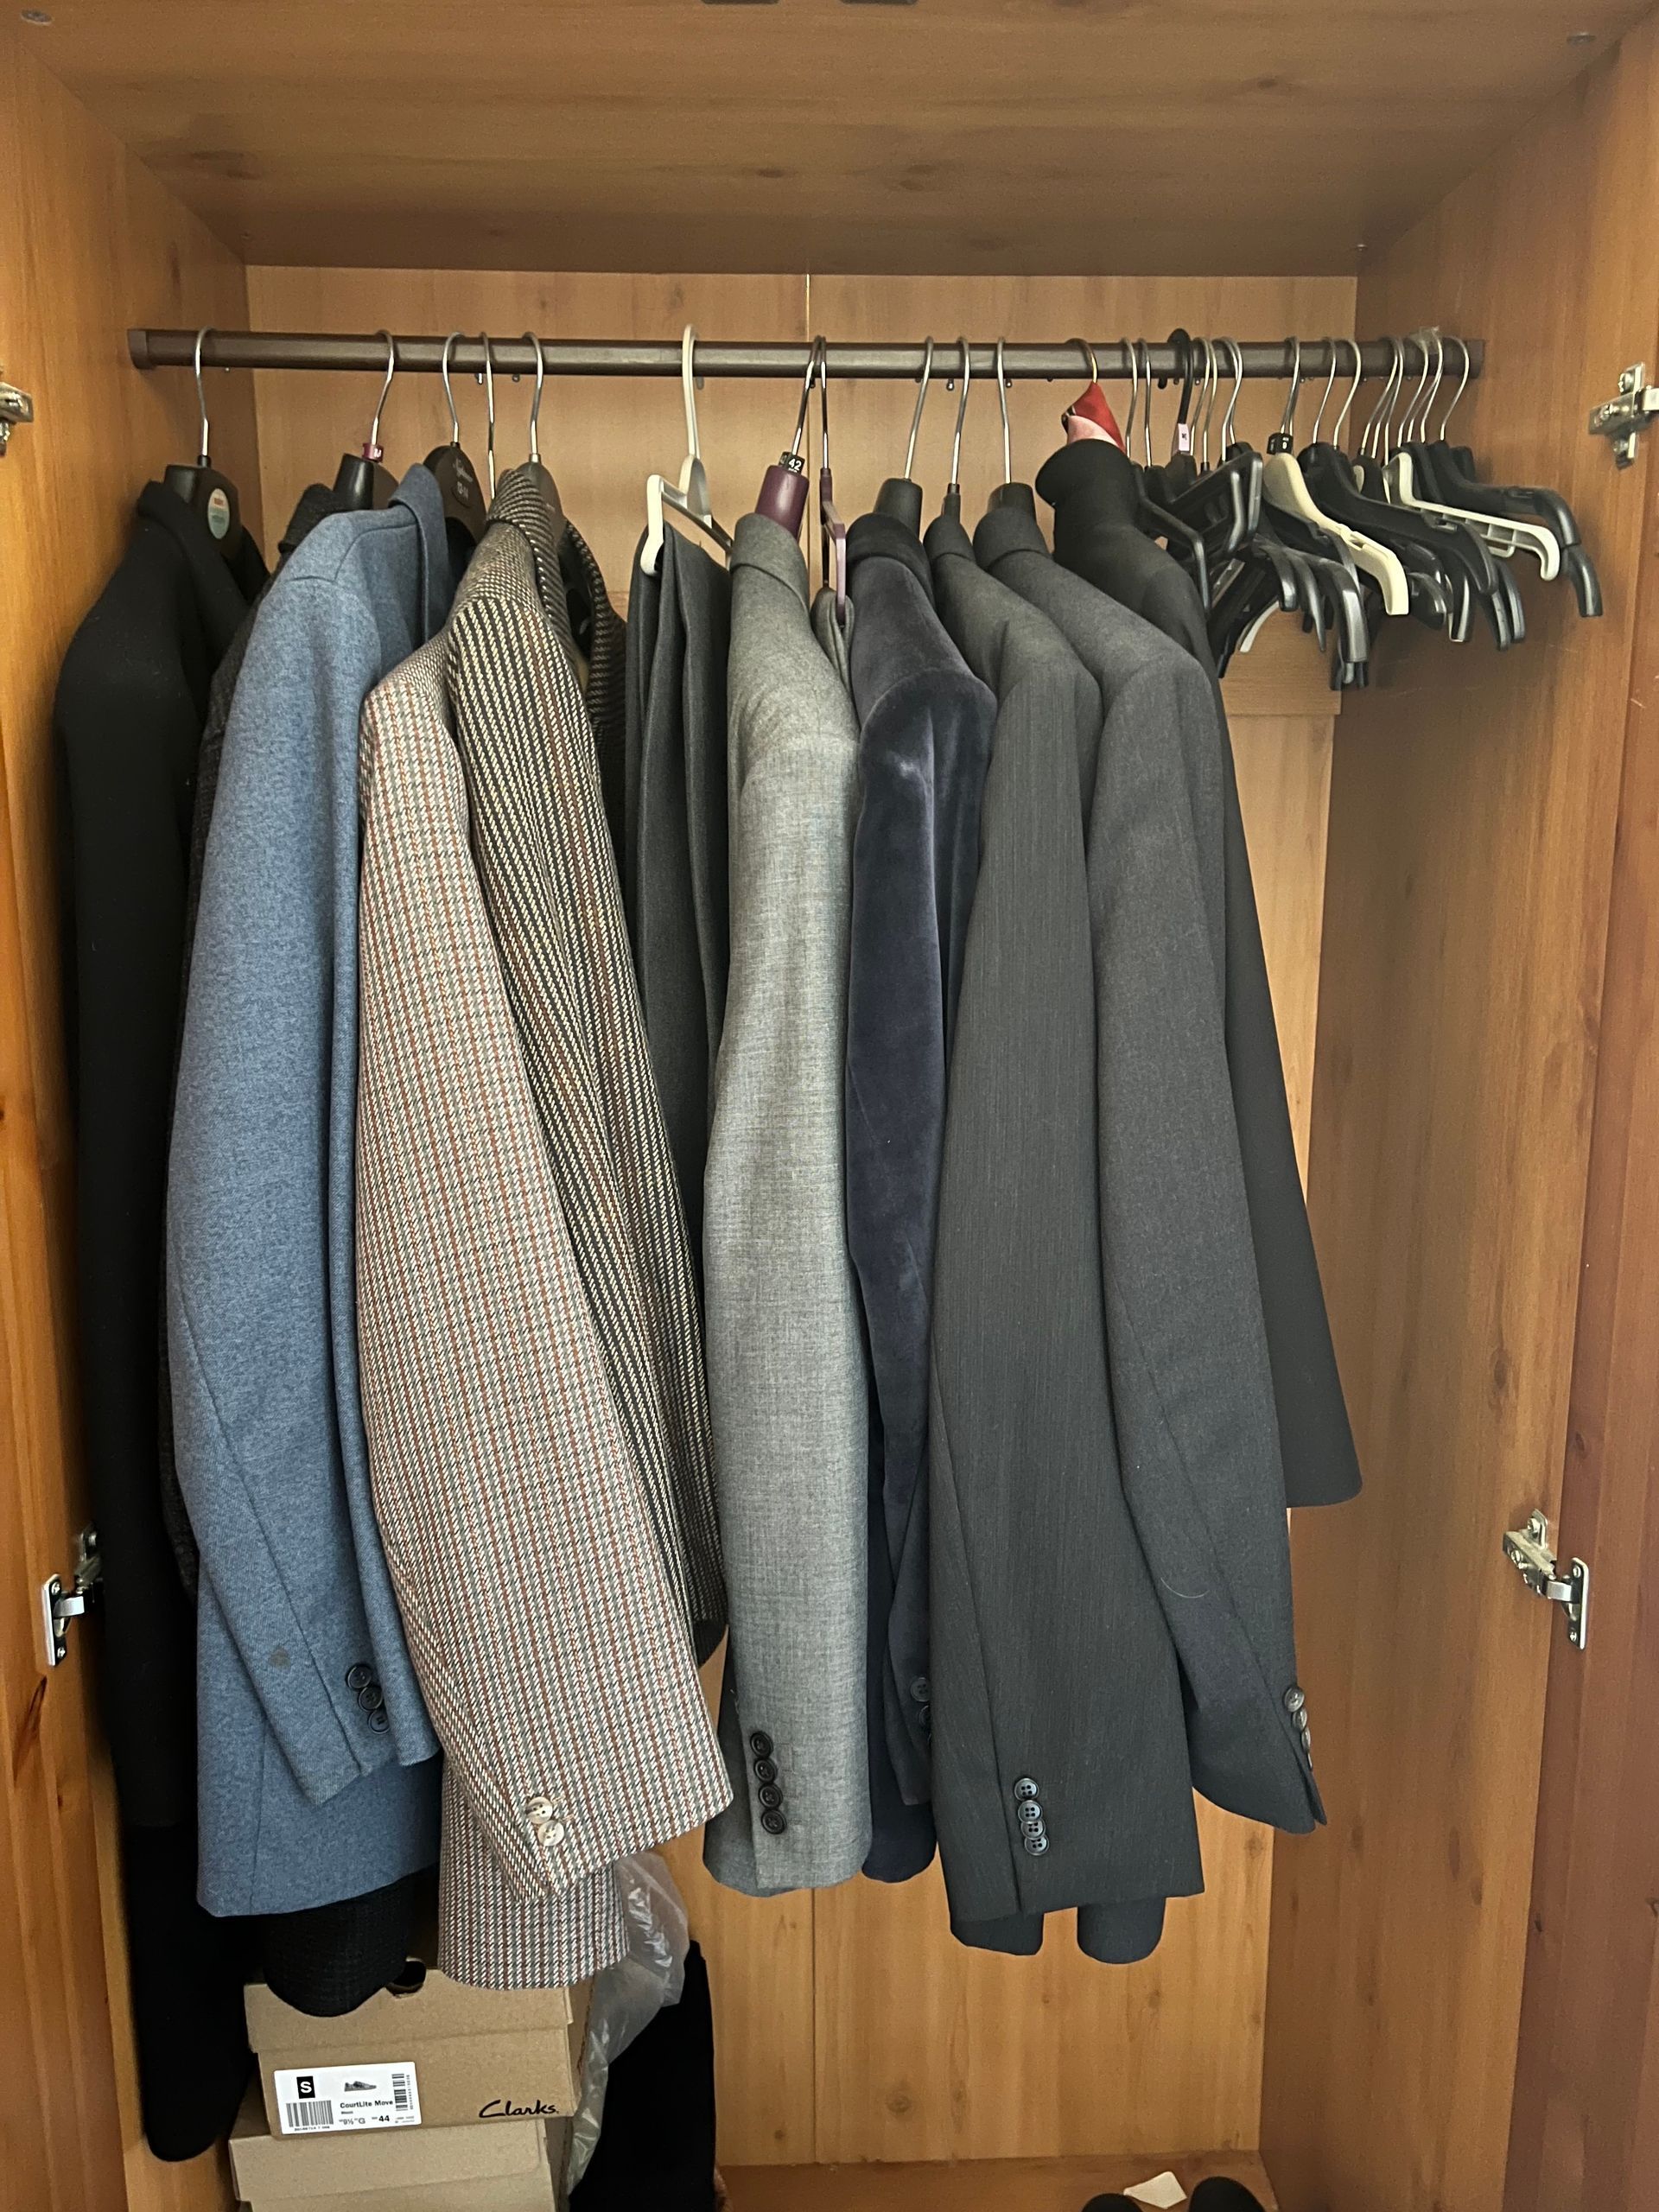 An open wardrobe displaying smart clothing.